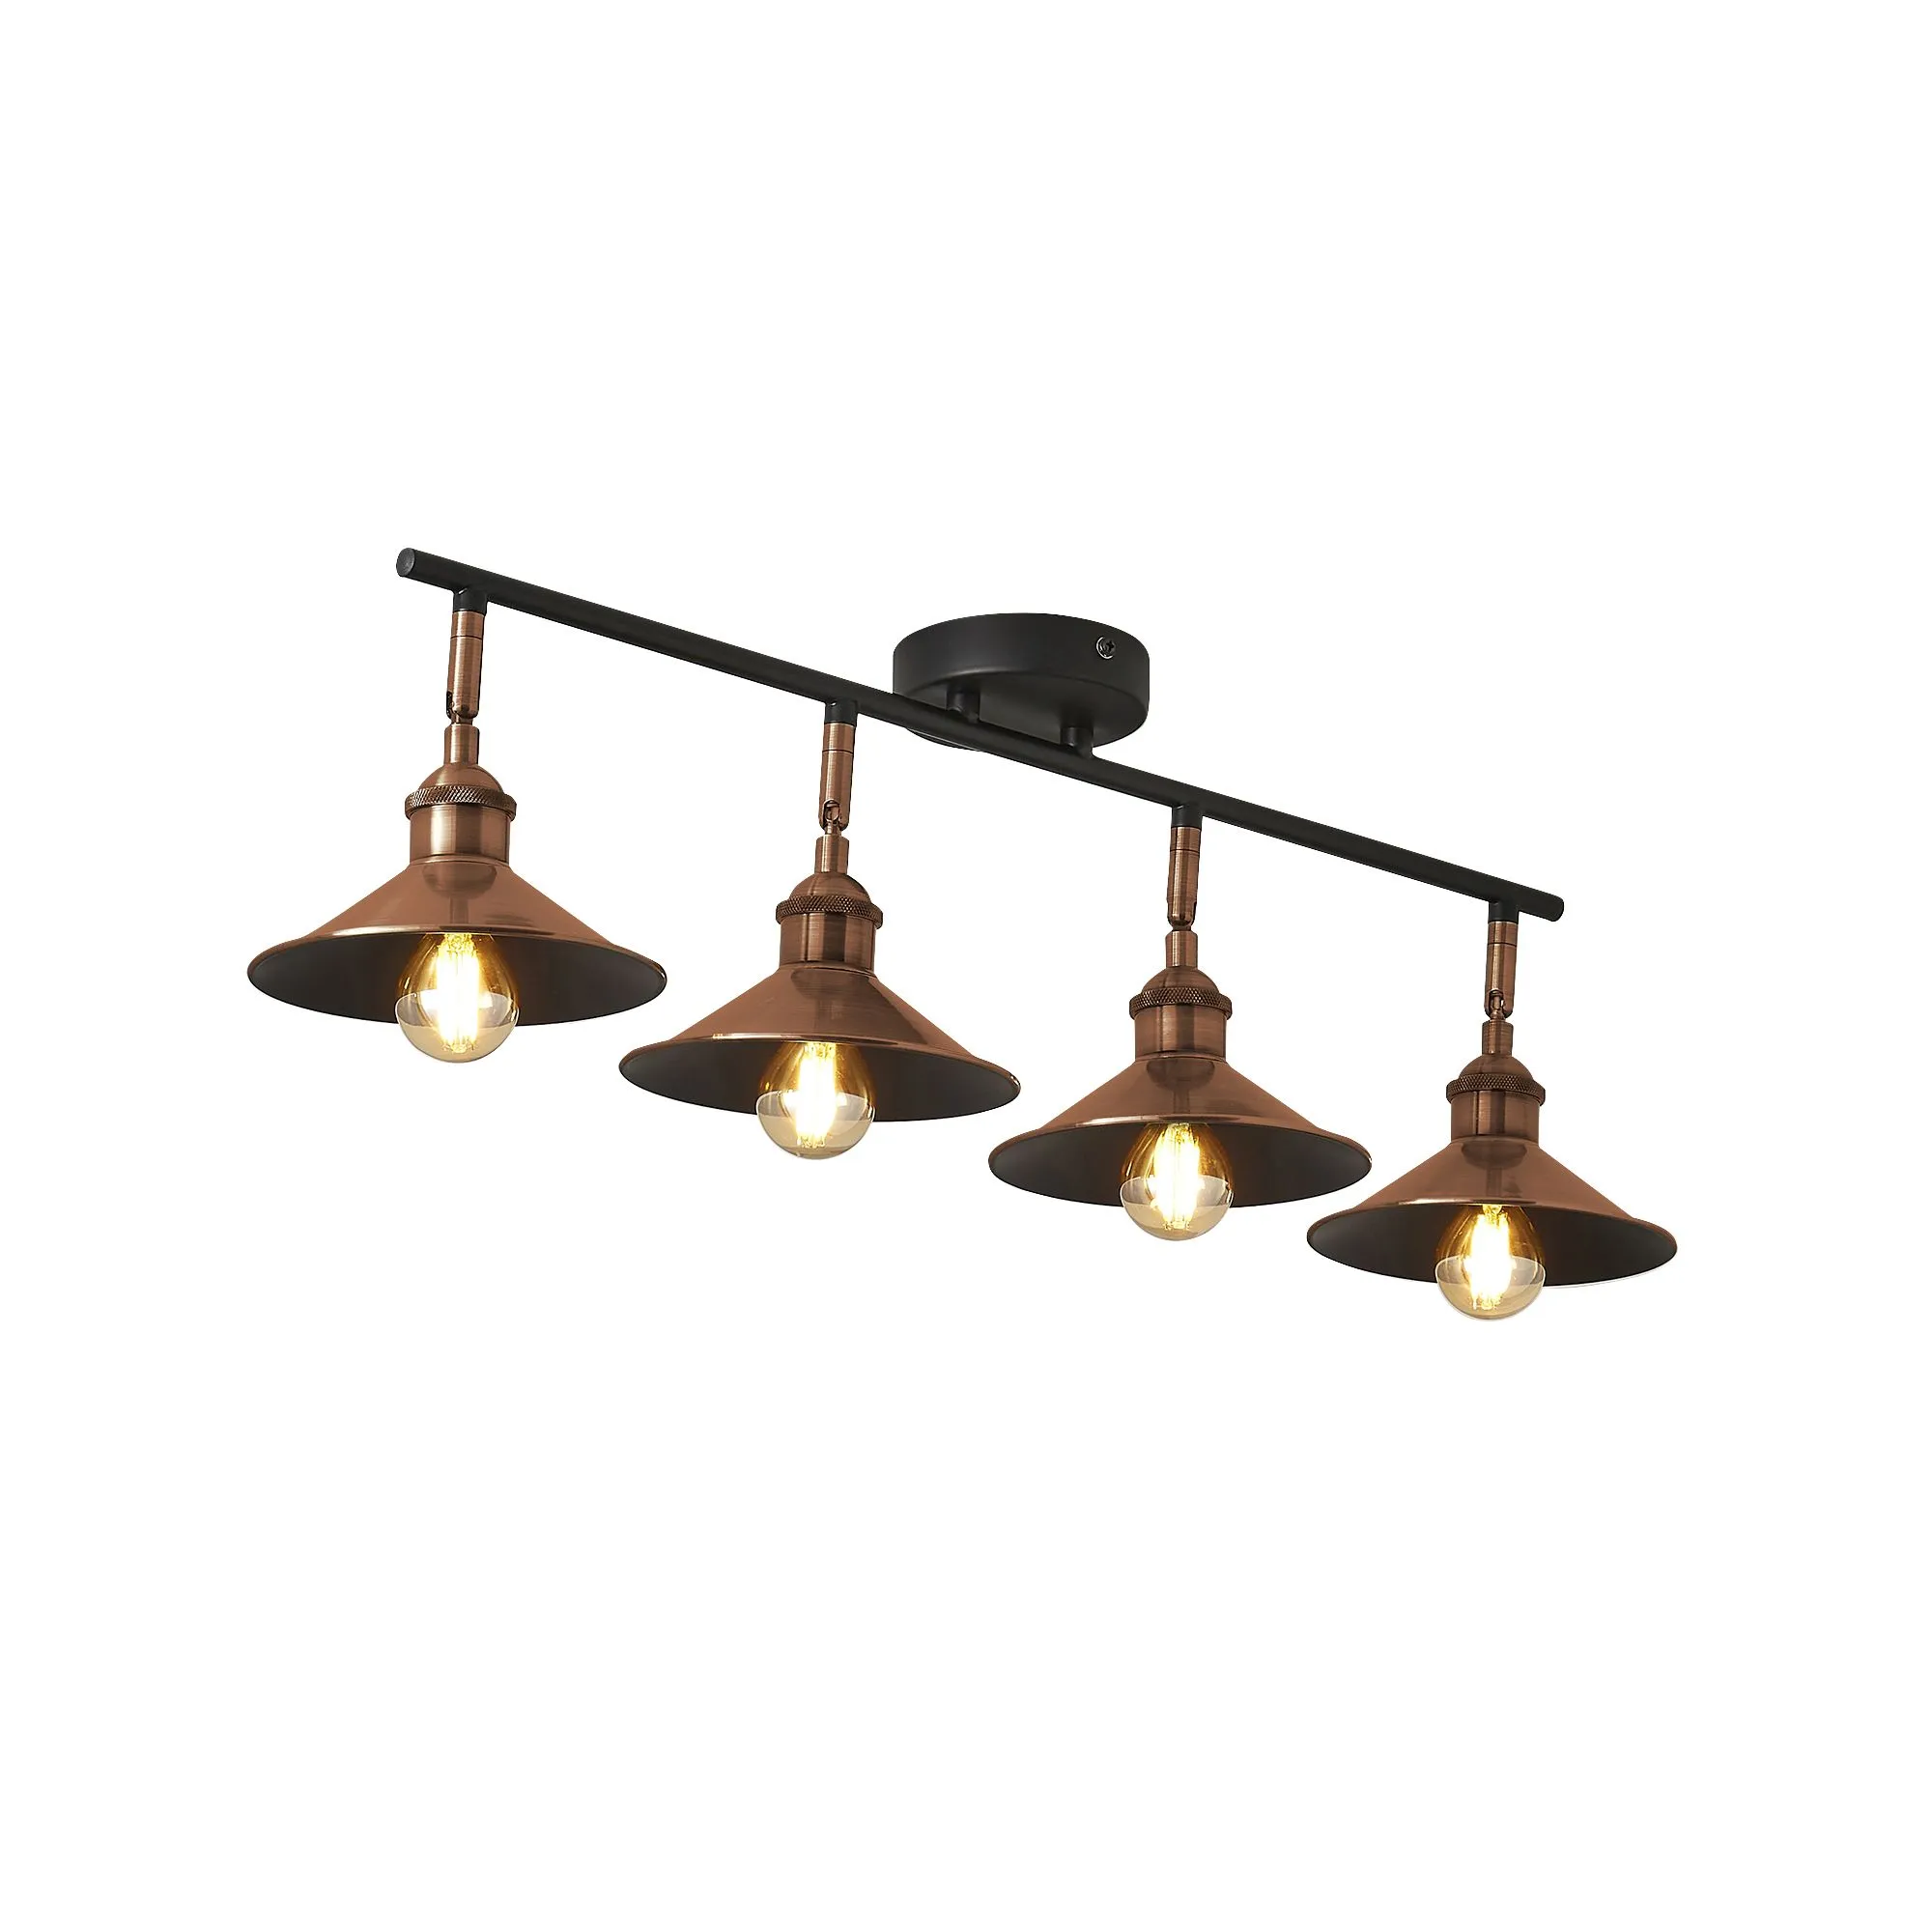 Bureau Satin Black Copper effect Mains-powered 4 lamp Spotlight bar